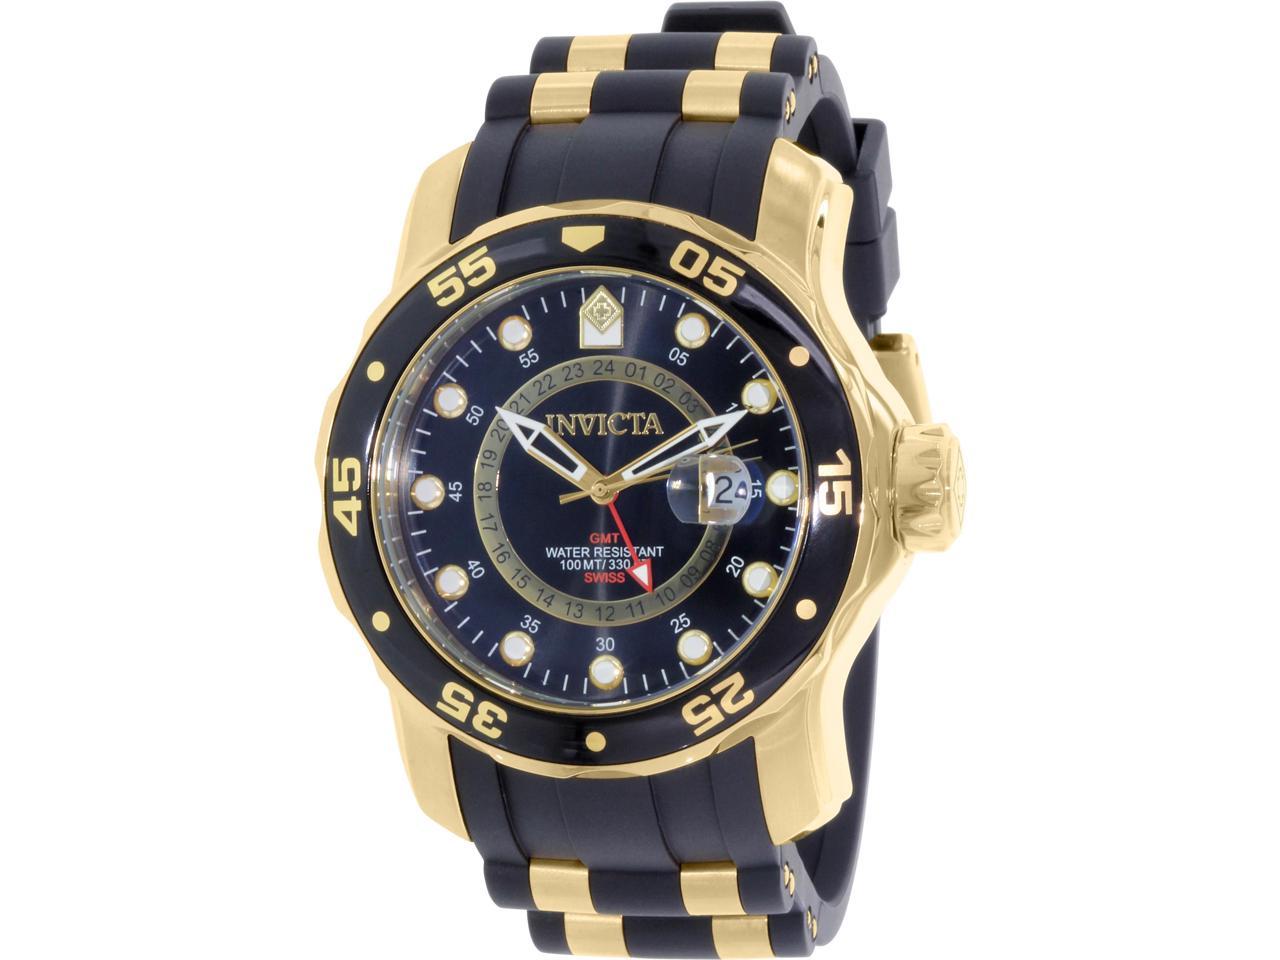 Invicta Pro Diver GMT Watch 6991 - Newegg.com